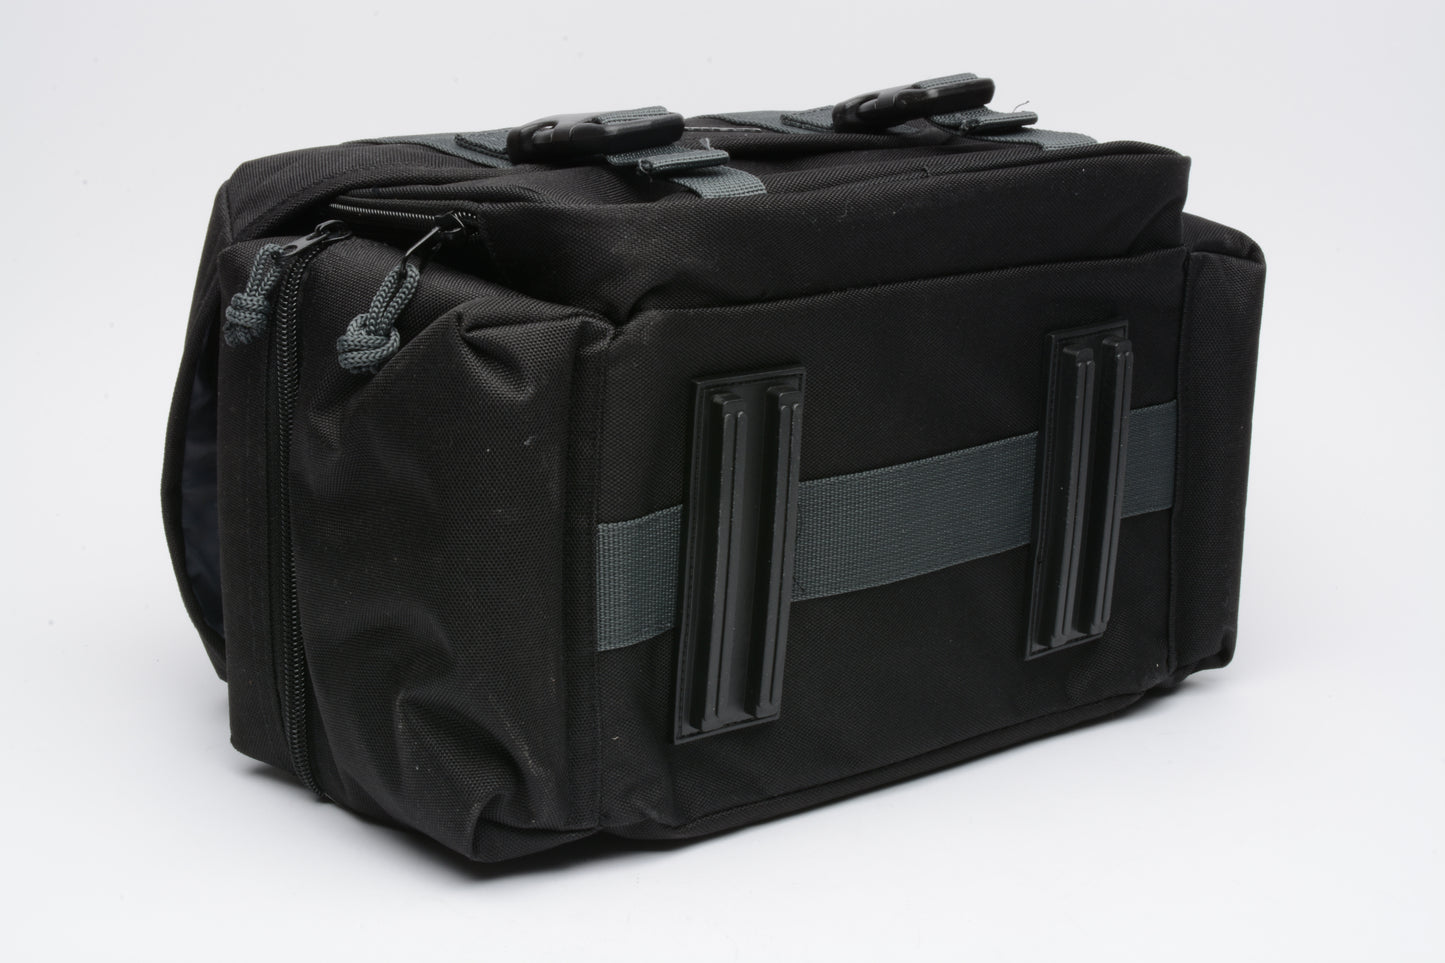 Canon camera shoulder bag, metal clips, ~12 x 8 x 8", nice quality (Black)